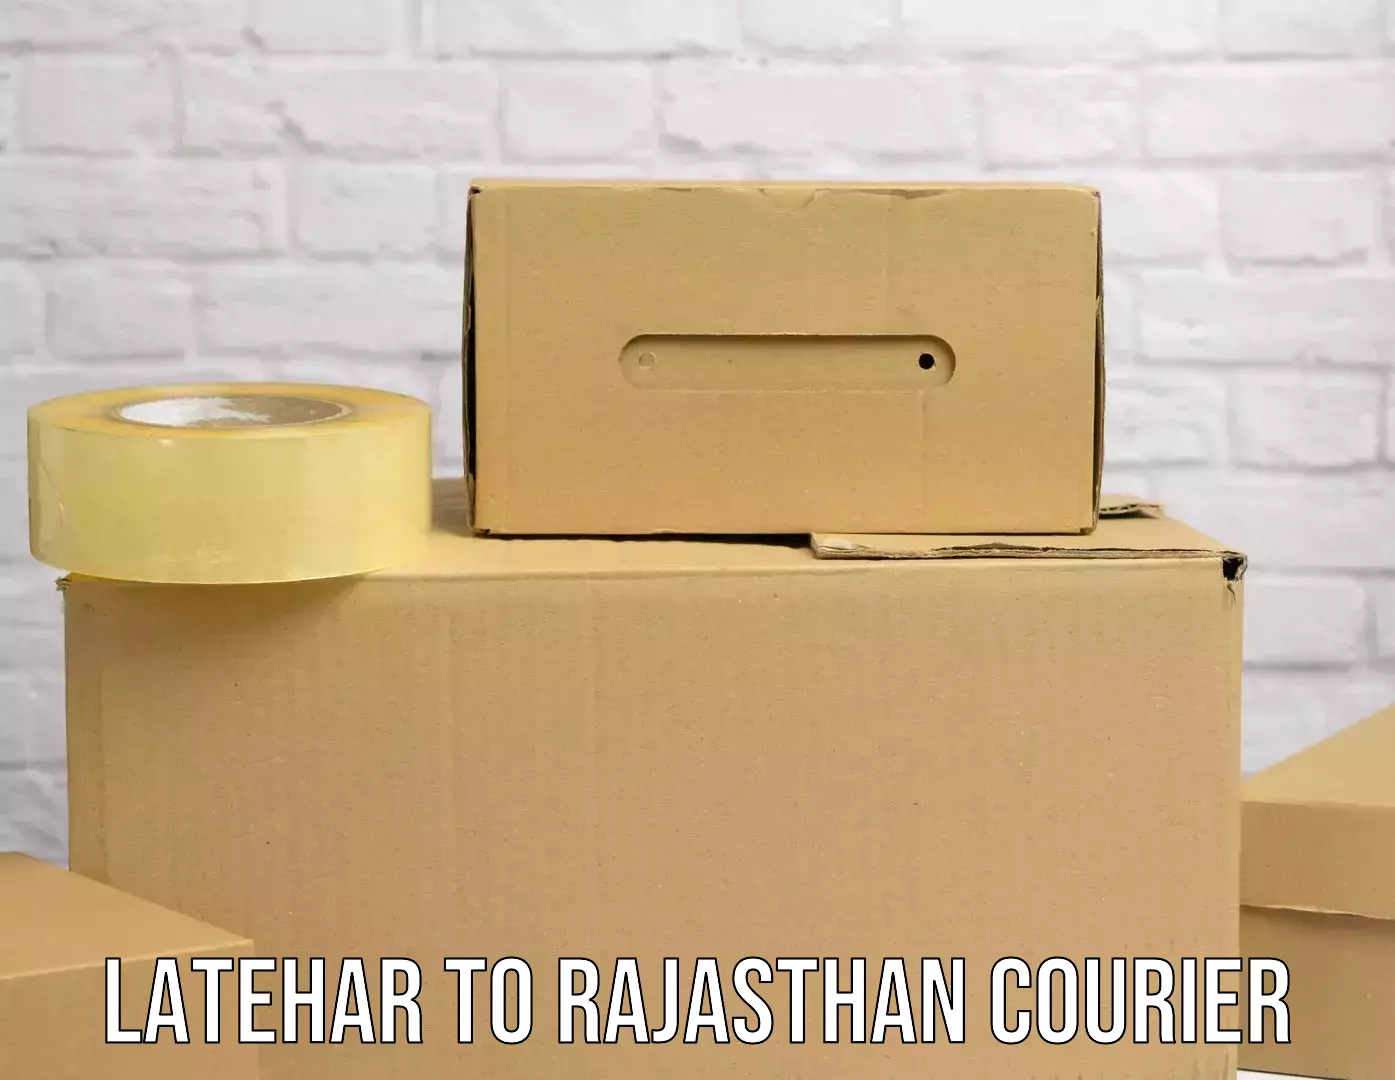 User-friendly delivery service Latehar to Pokhran